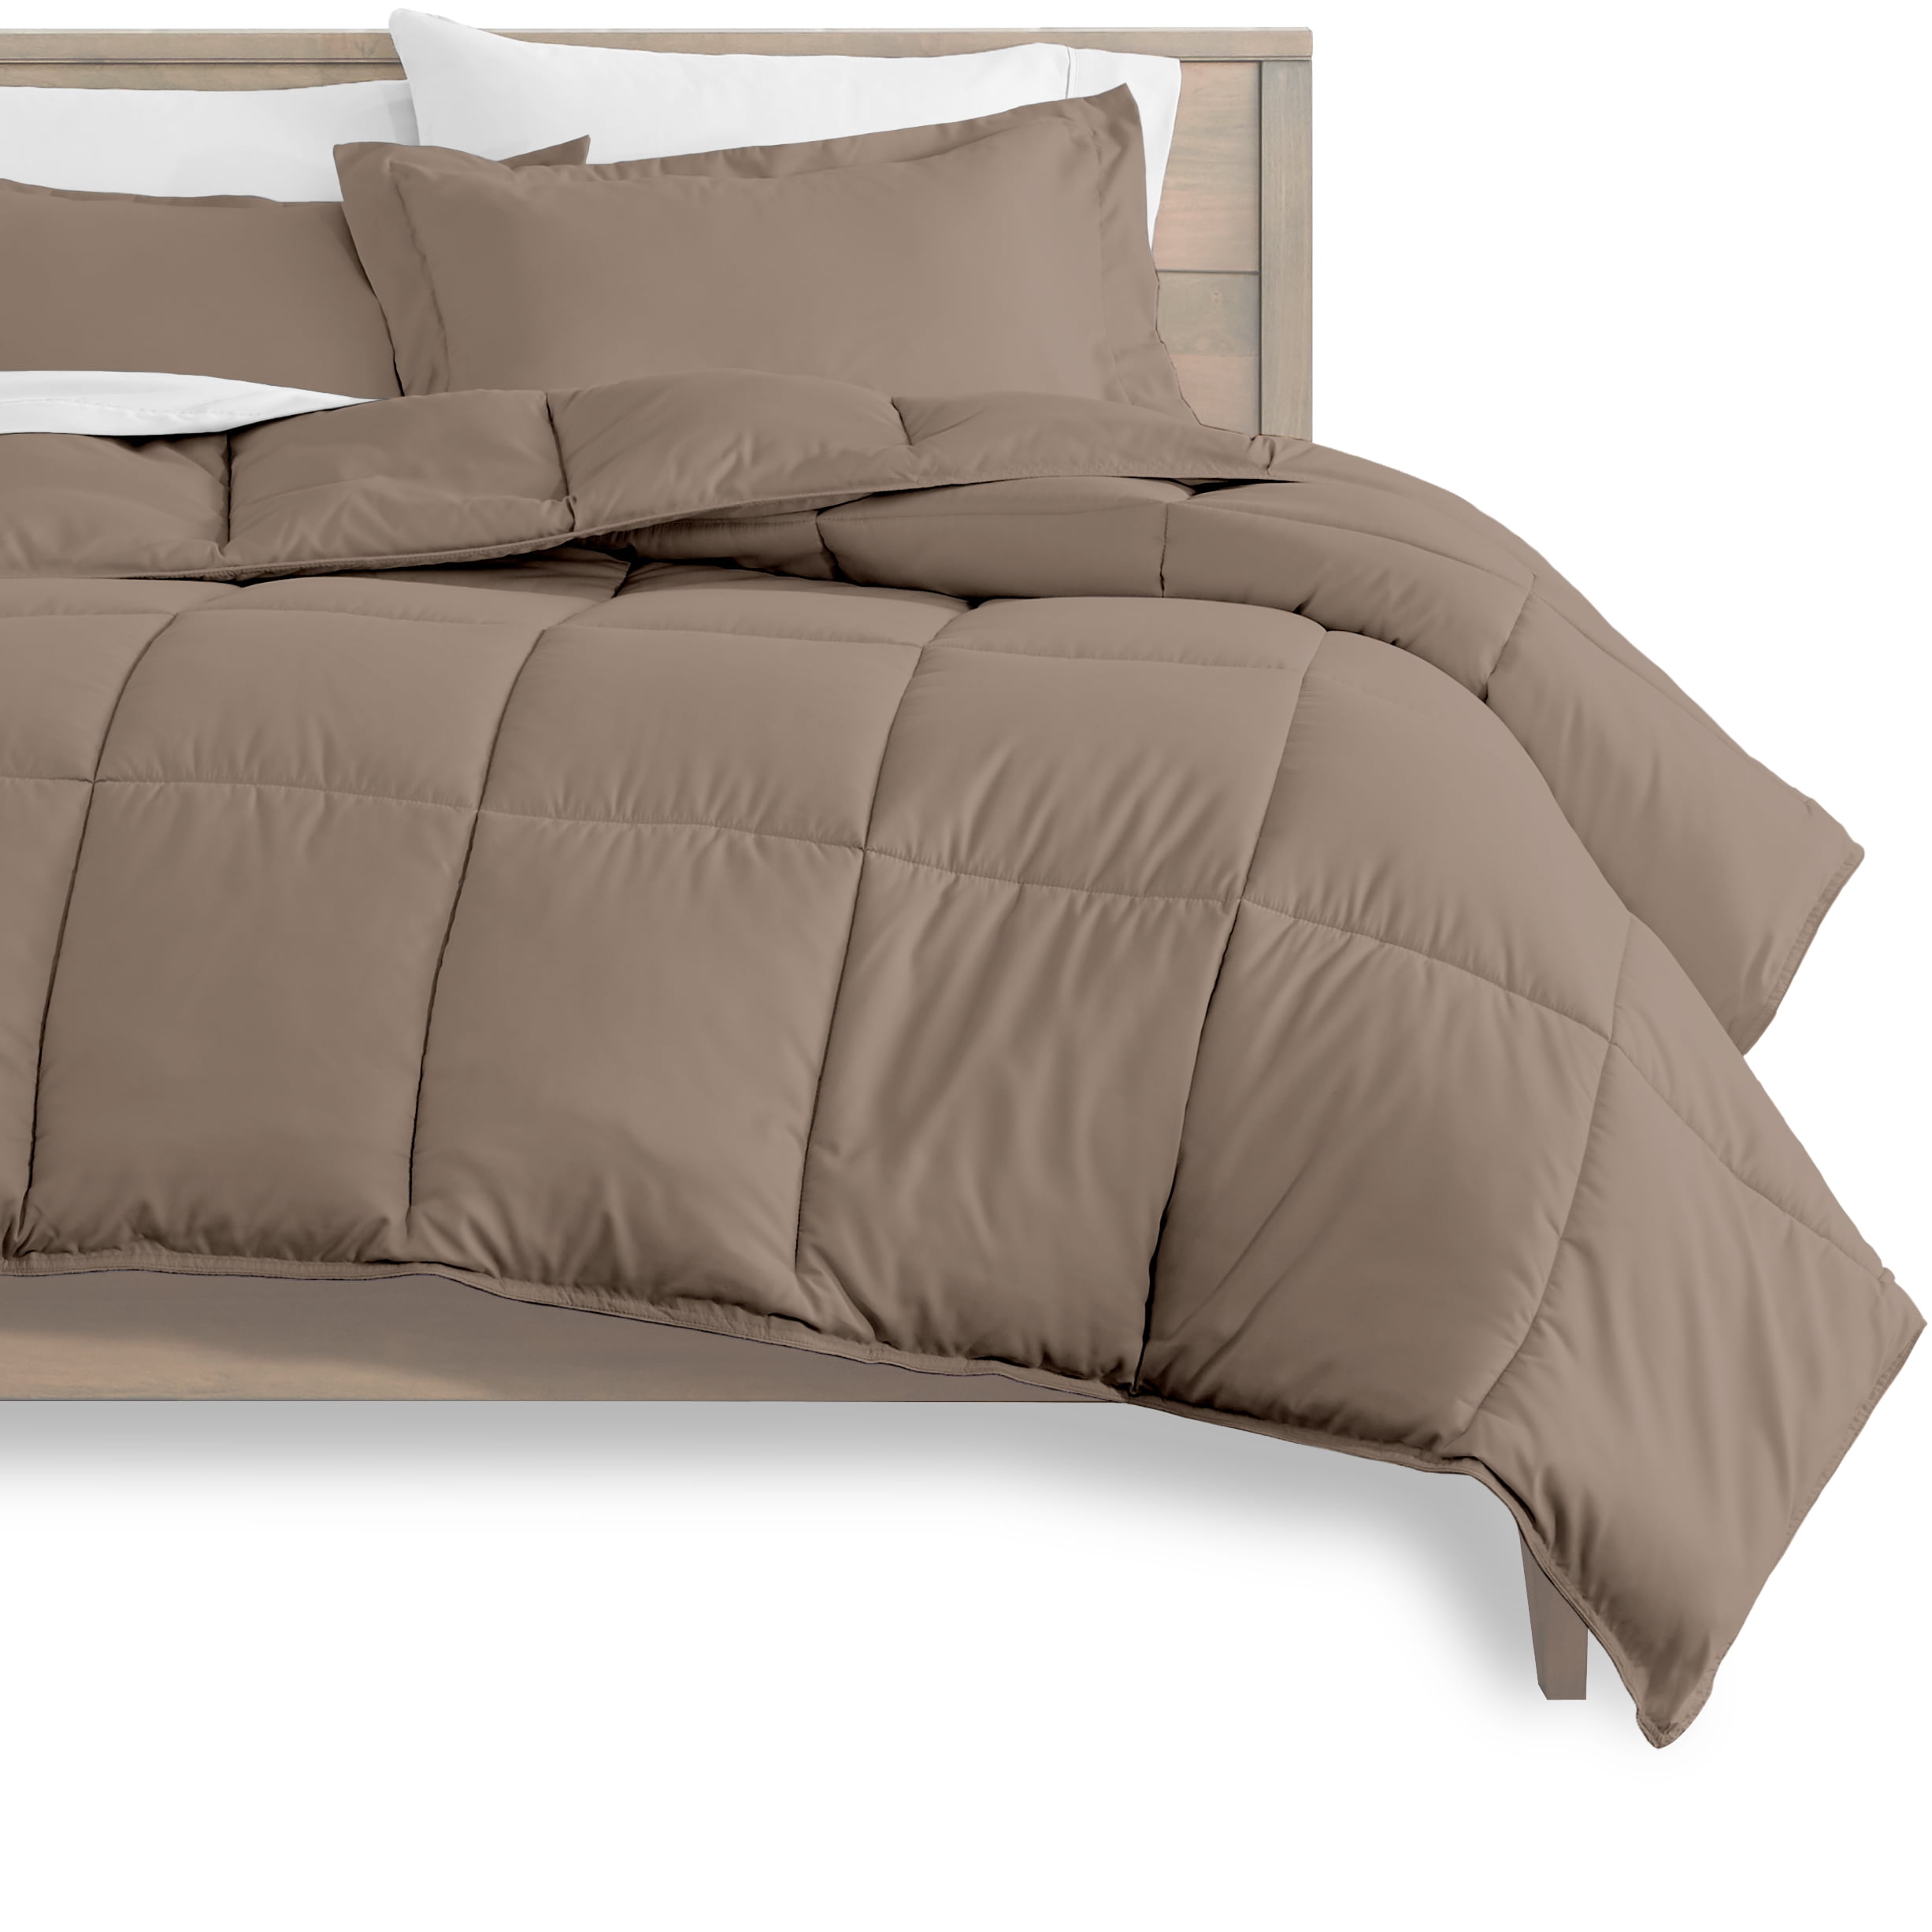 Long Comforter Set Taupe Sheet, Twin Extra Long Duvet Set